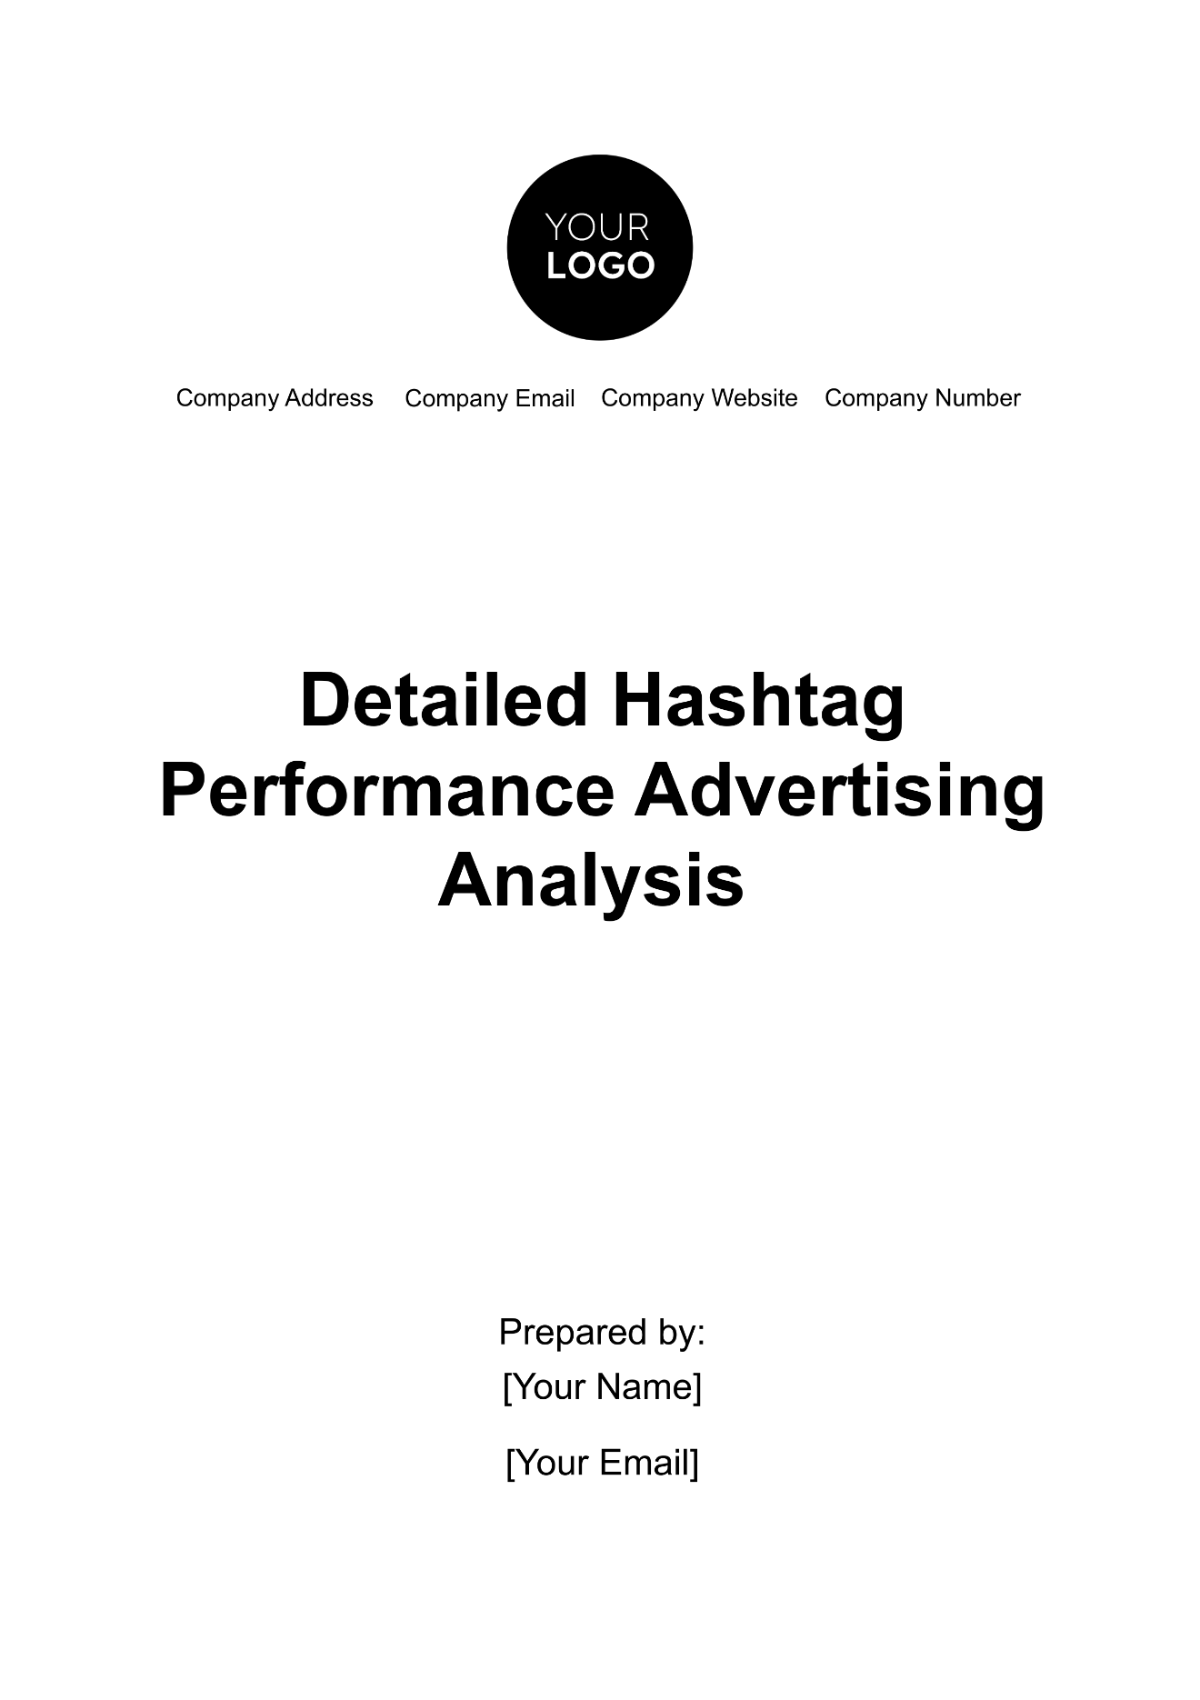 Free Detailed Hashtag Performance Advertising Analysis Template